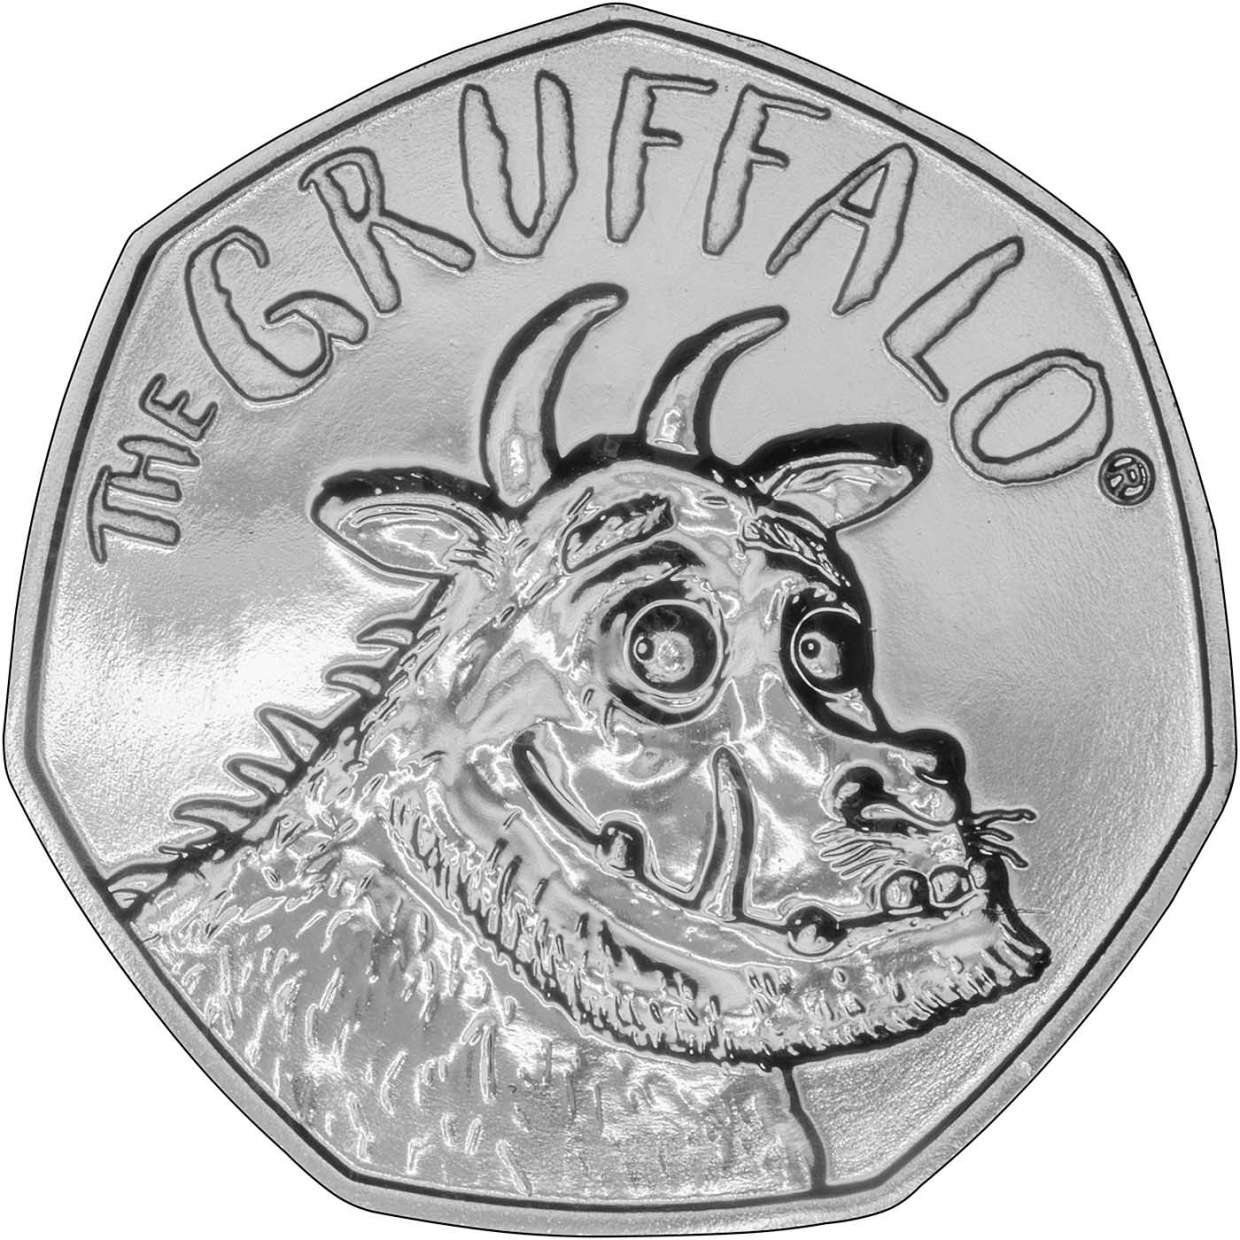 Gruffalo Coin BU Reverse